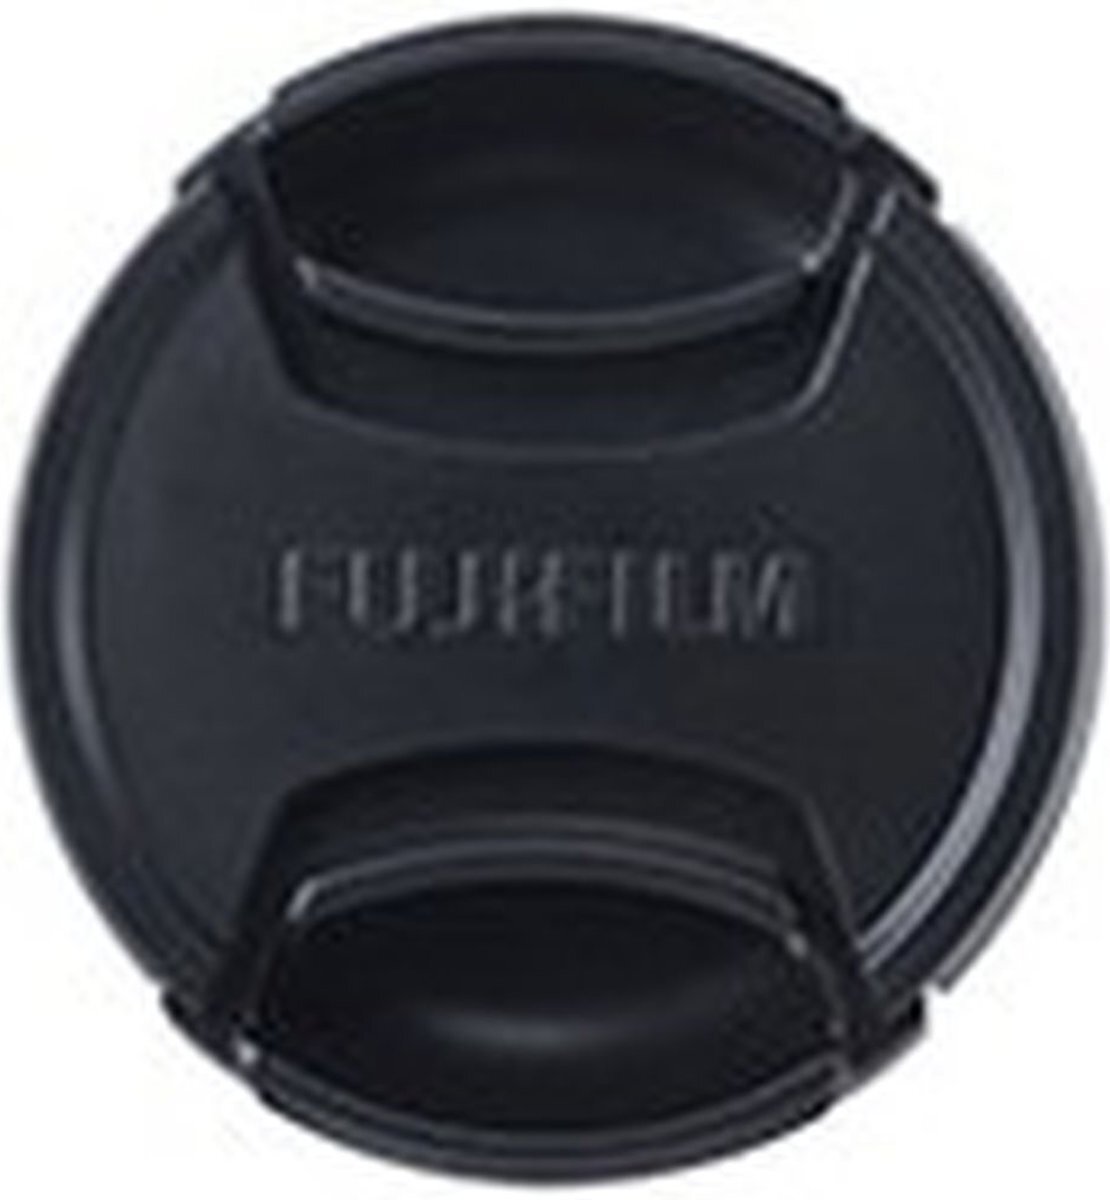 Fujifilm FLCP-39 II Front Lens Cap